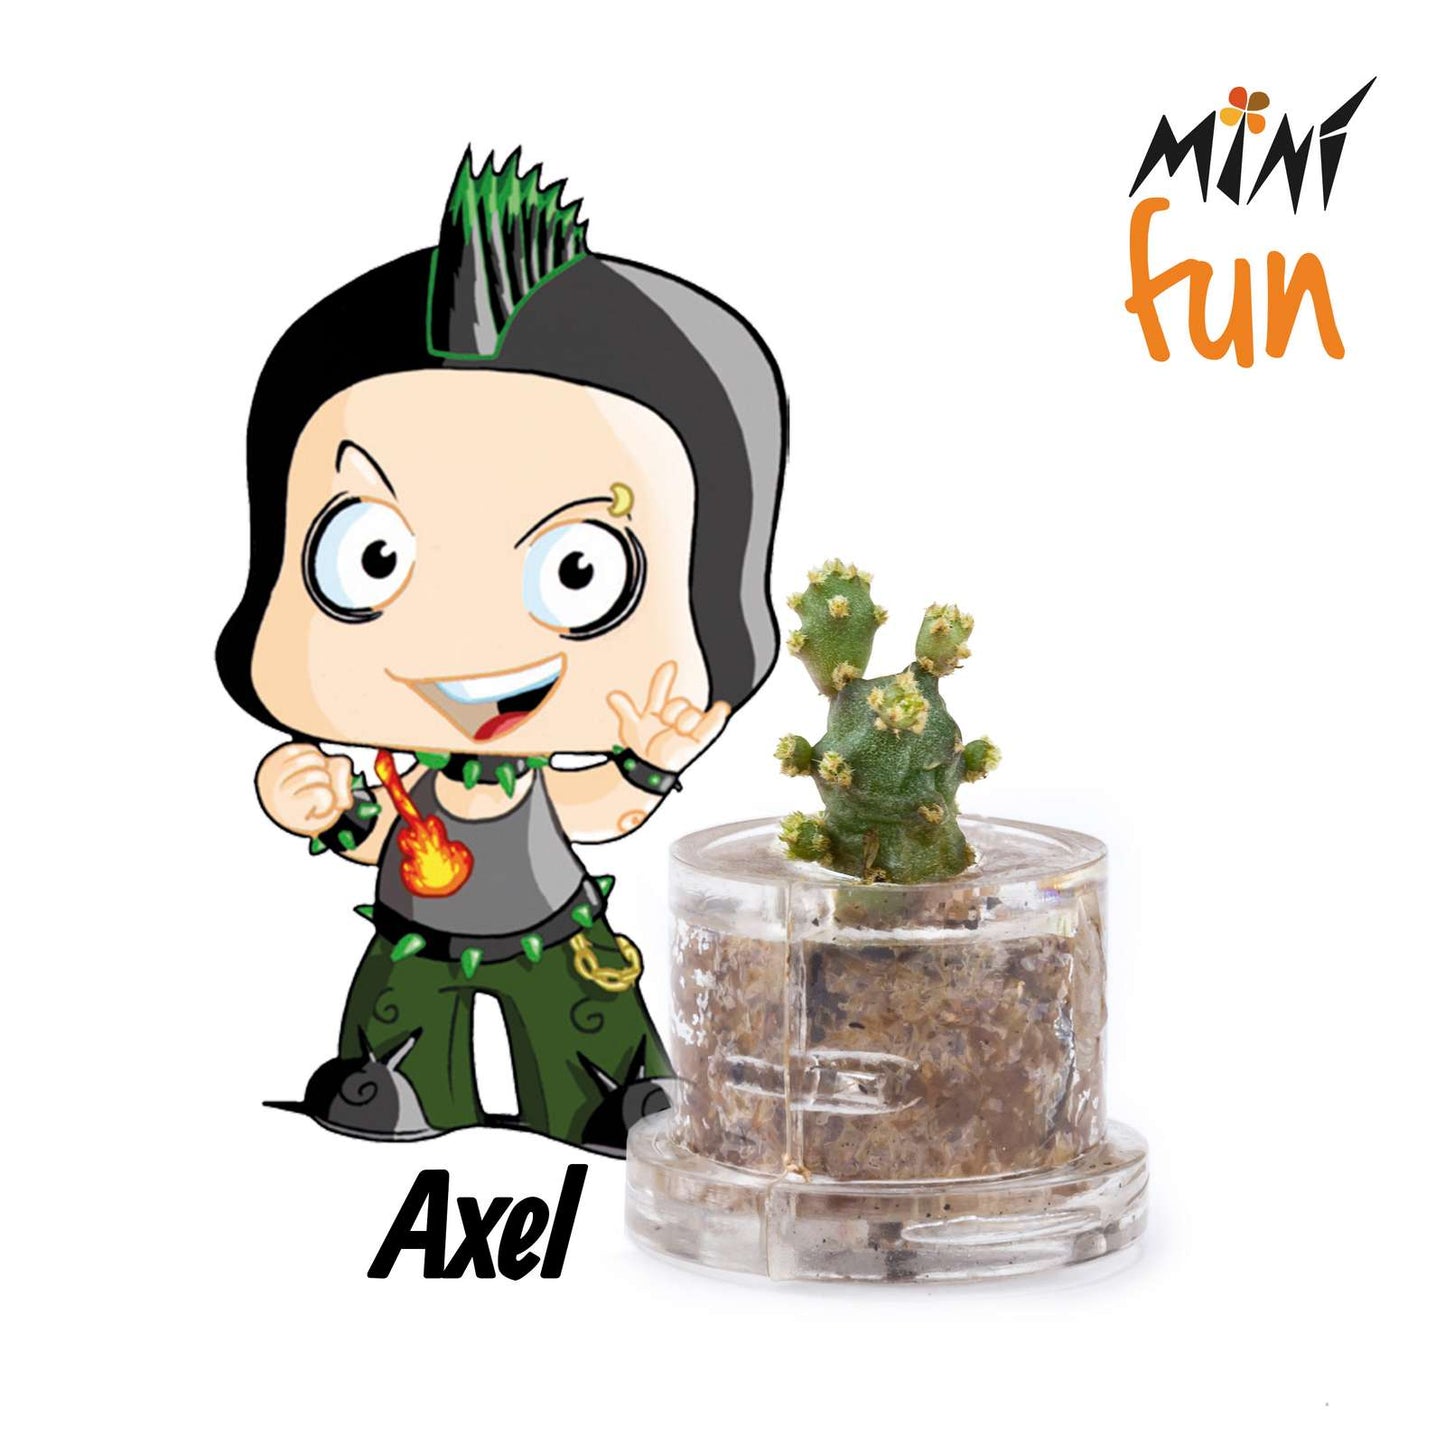 Minì Fun Axel - Mini pianta per i determinati